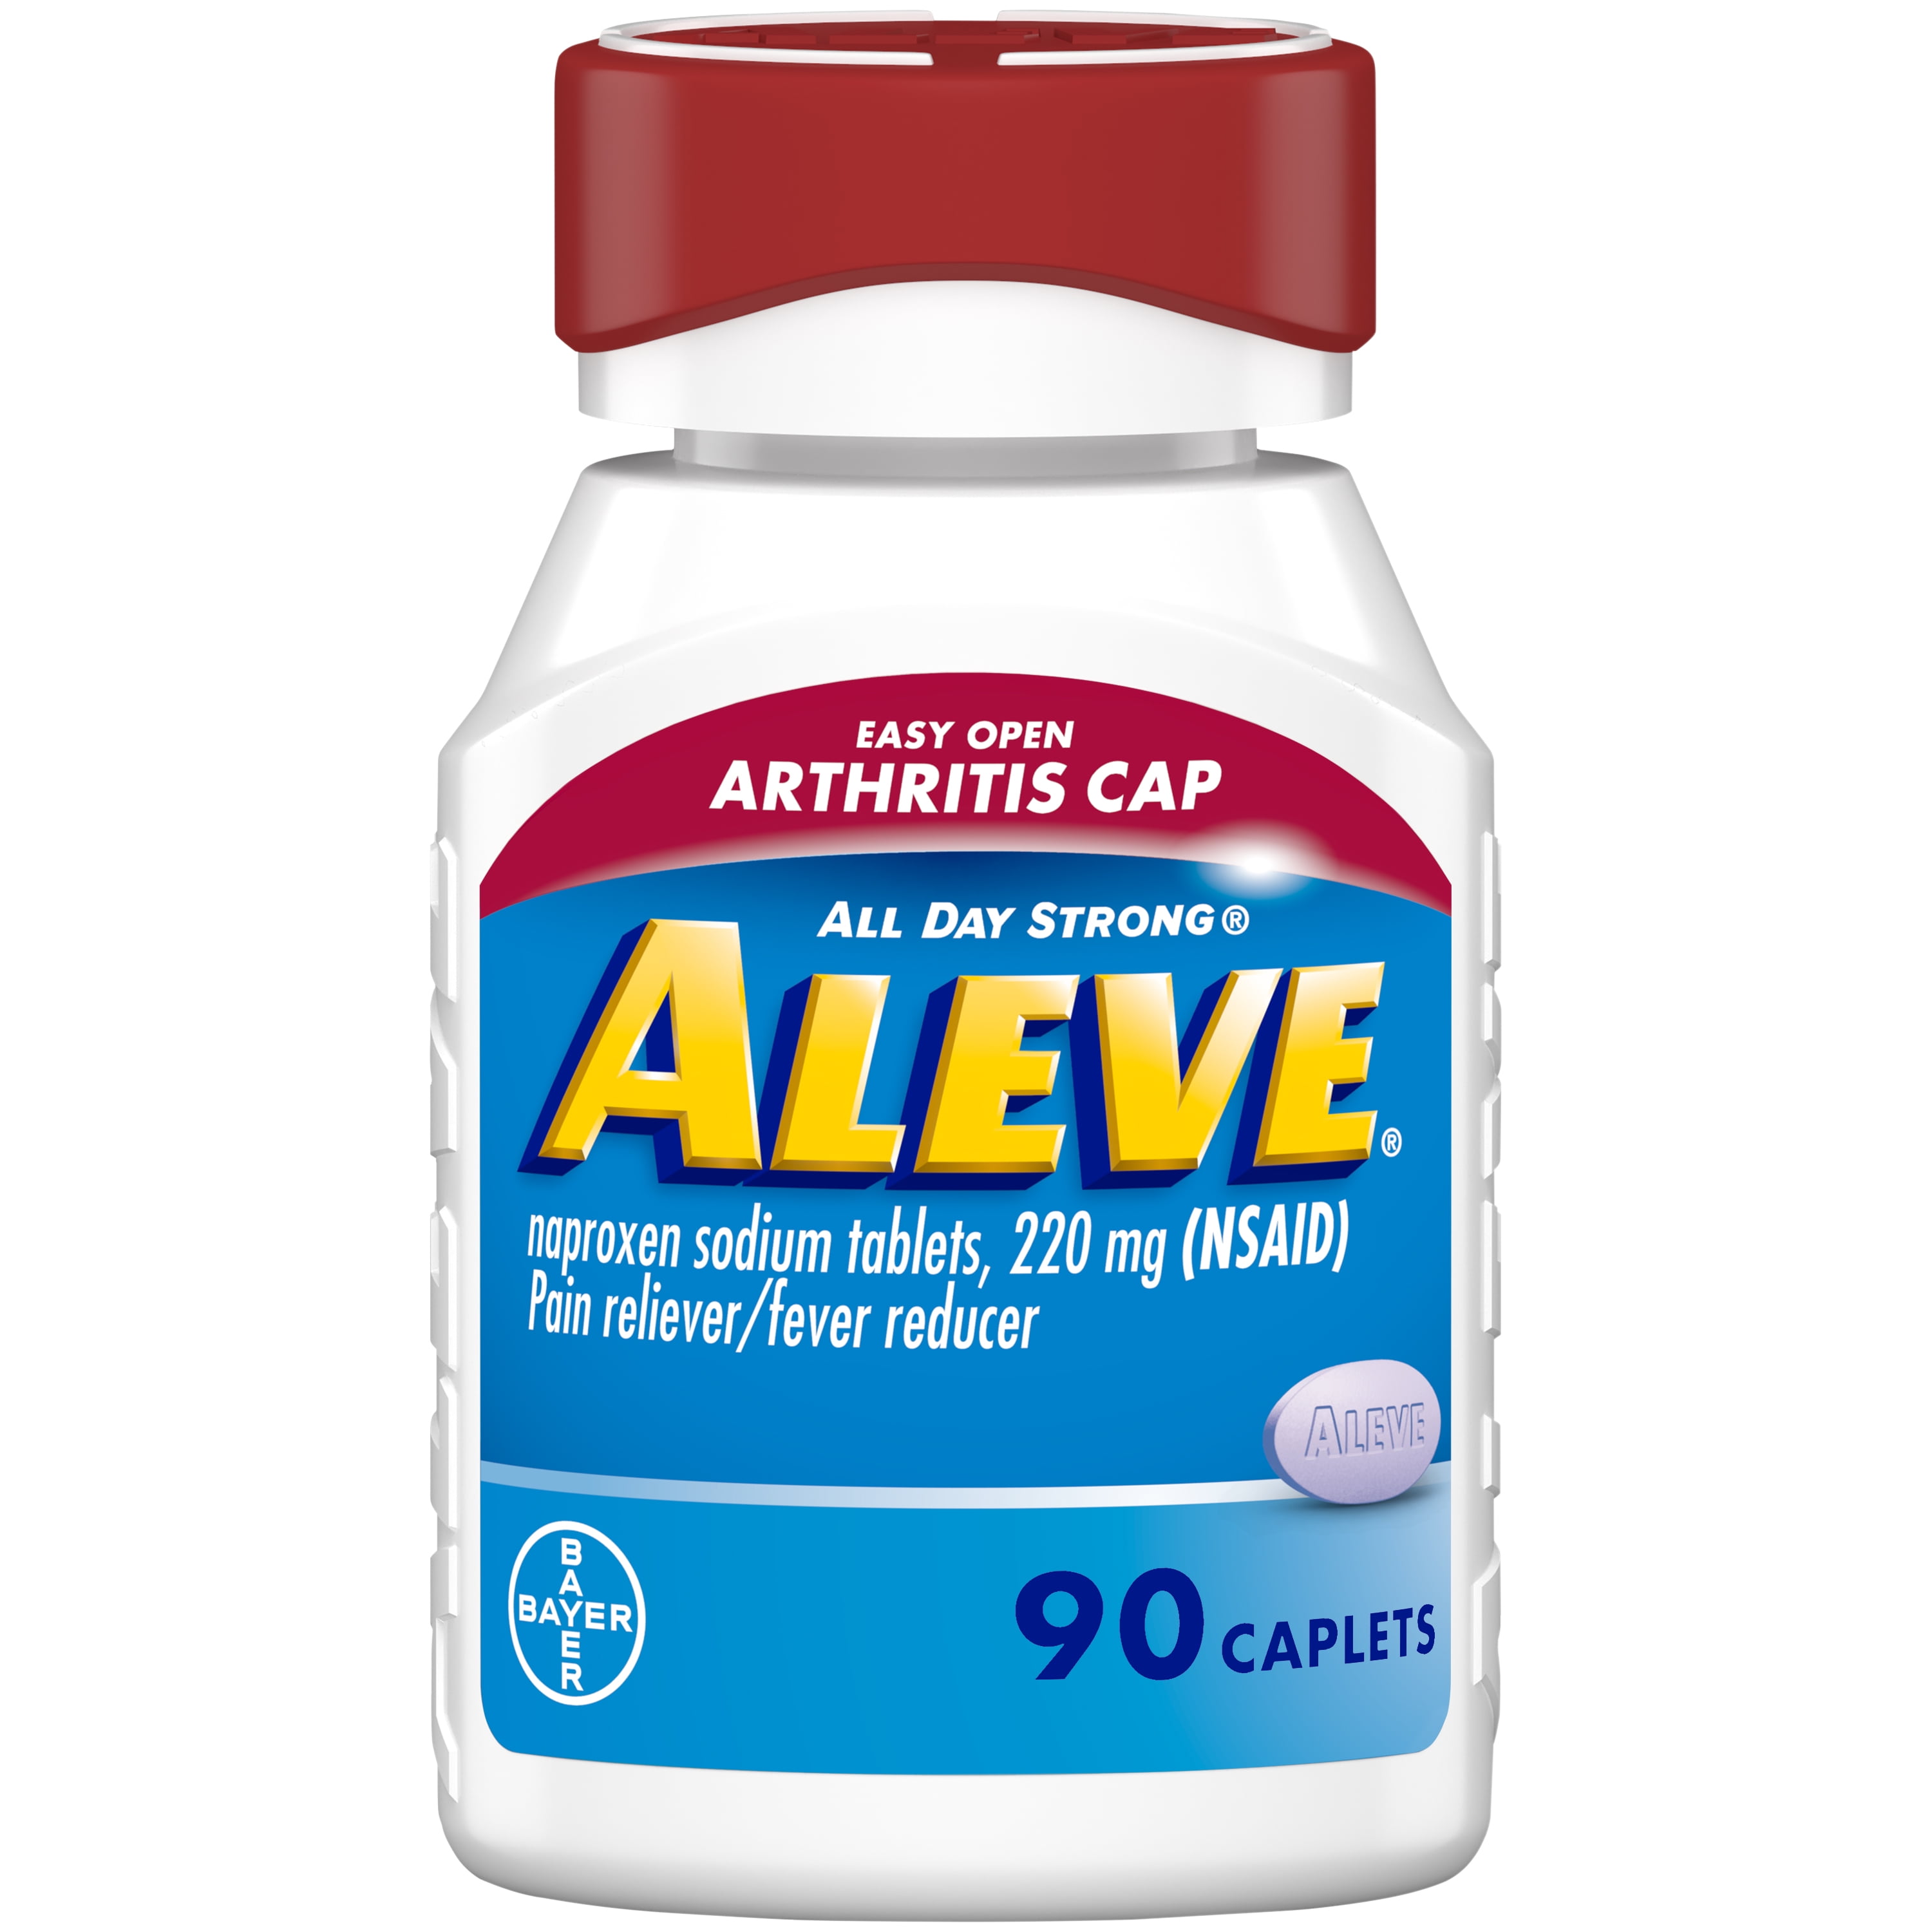 Aleve Pain Relief Naproxen Sodium Caplets with Easy Open Arthritis Cap ‐ 90 Count